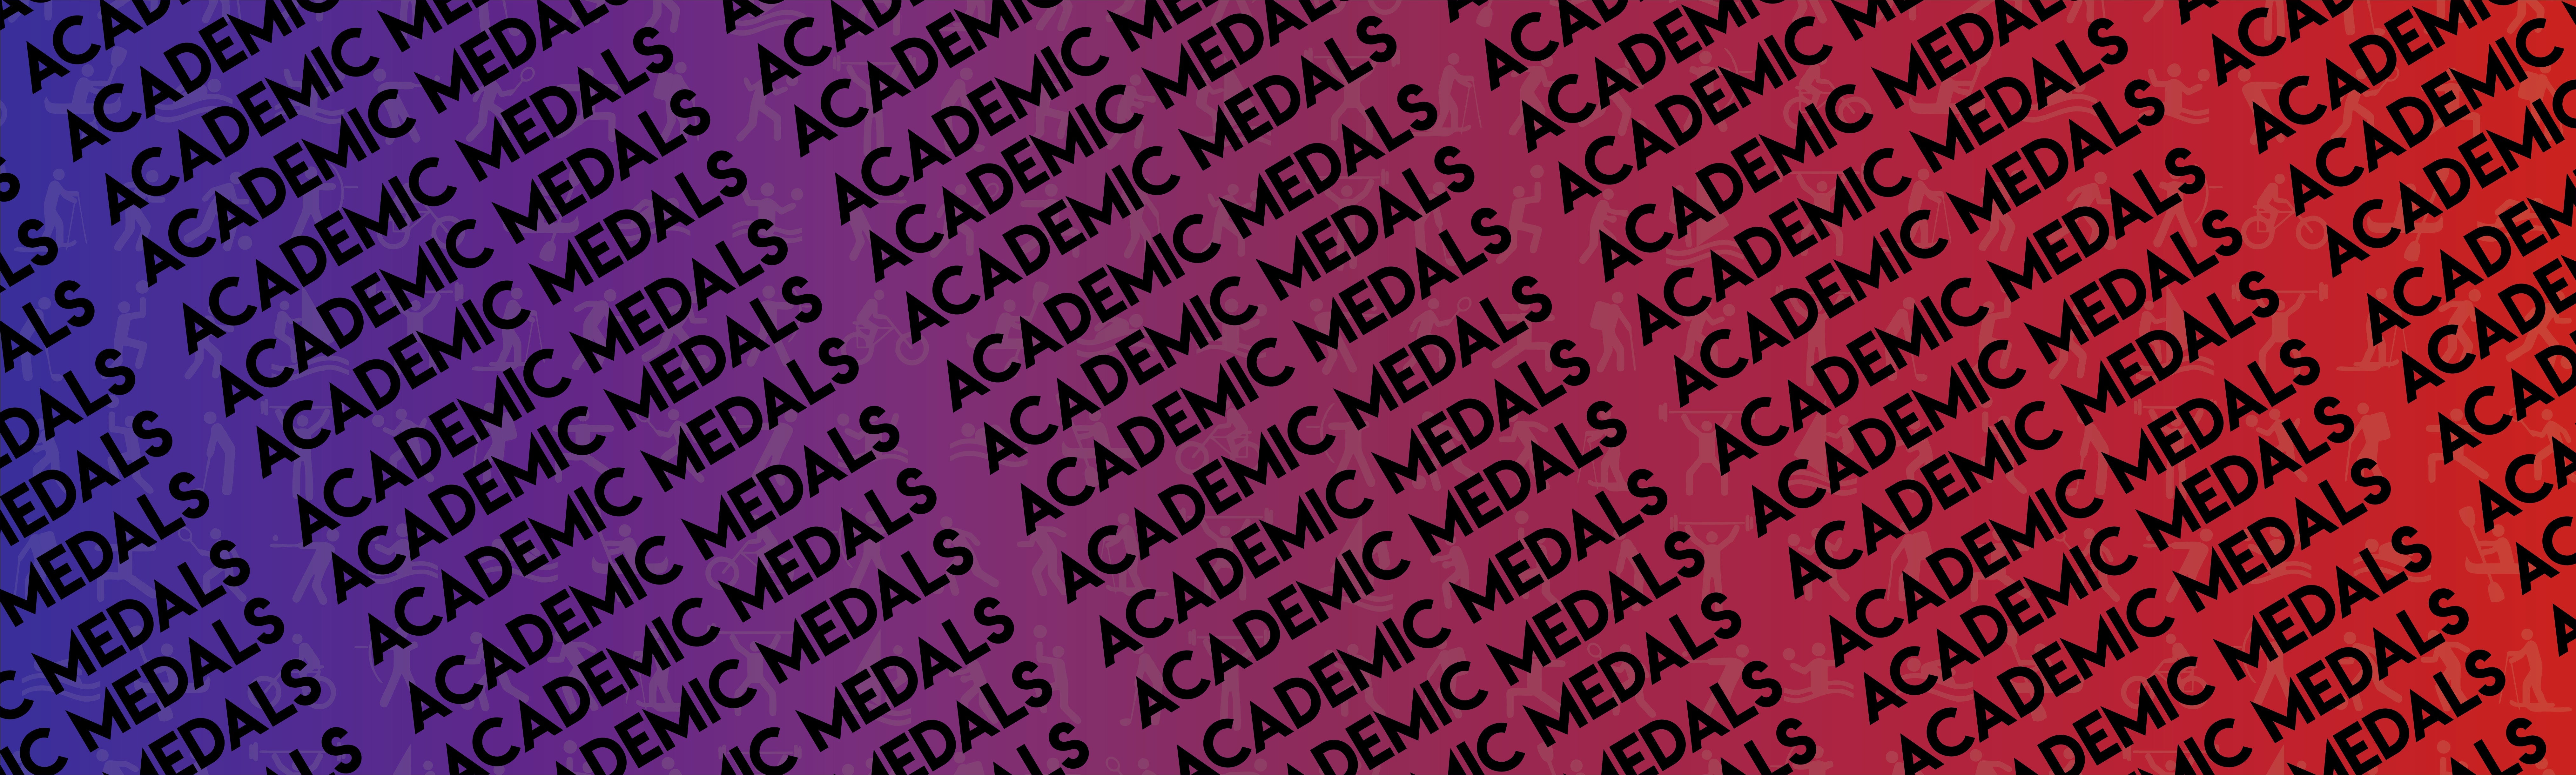 Academic Medals